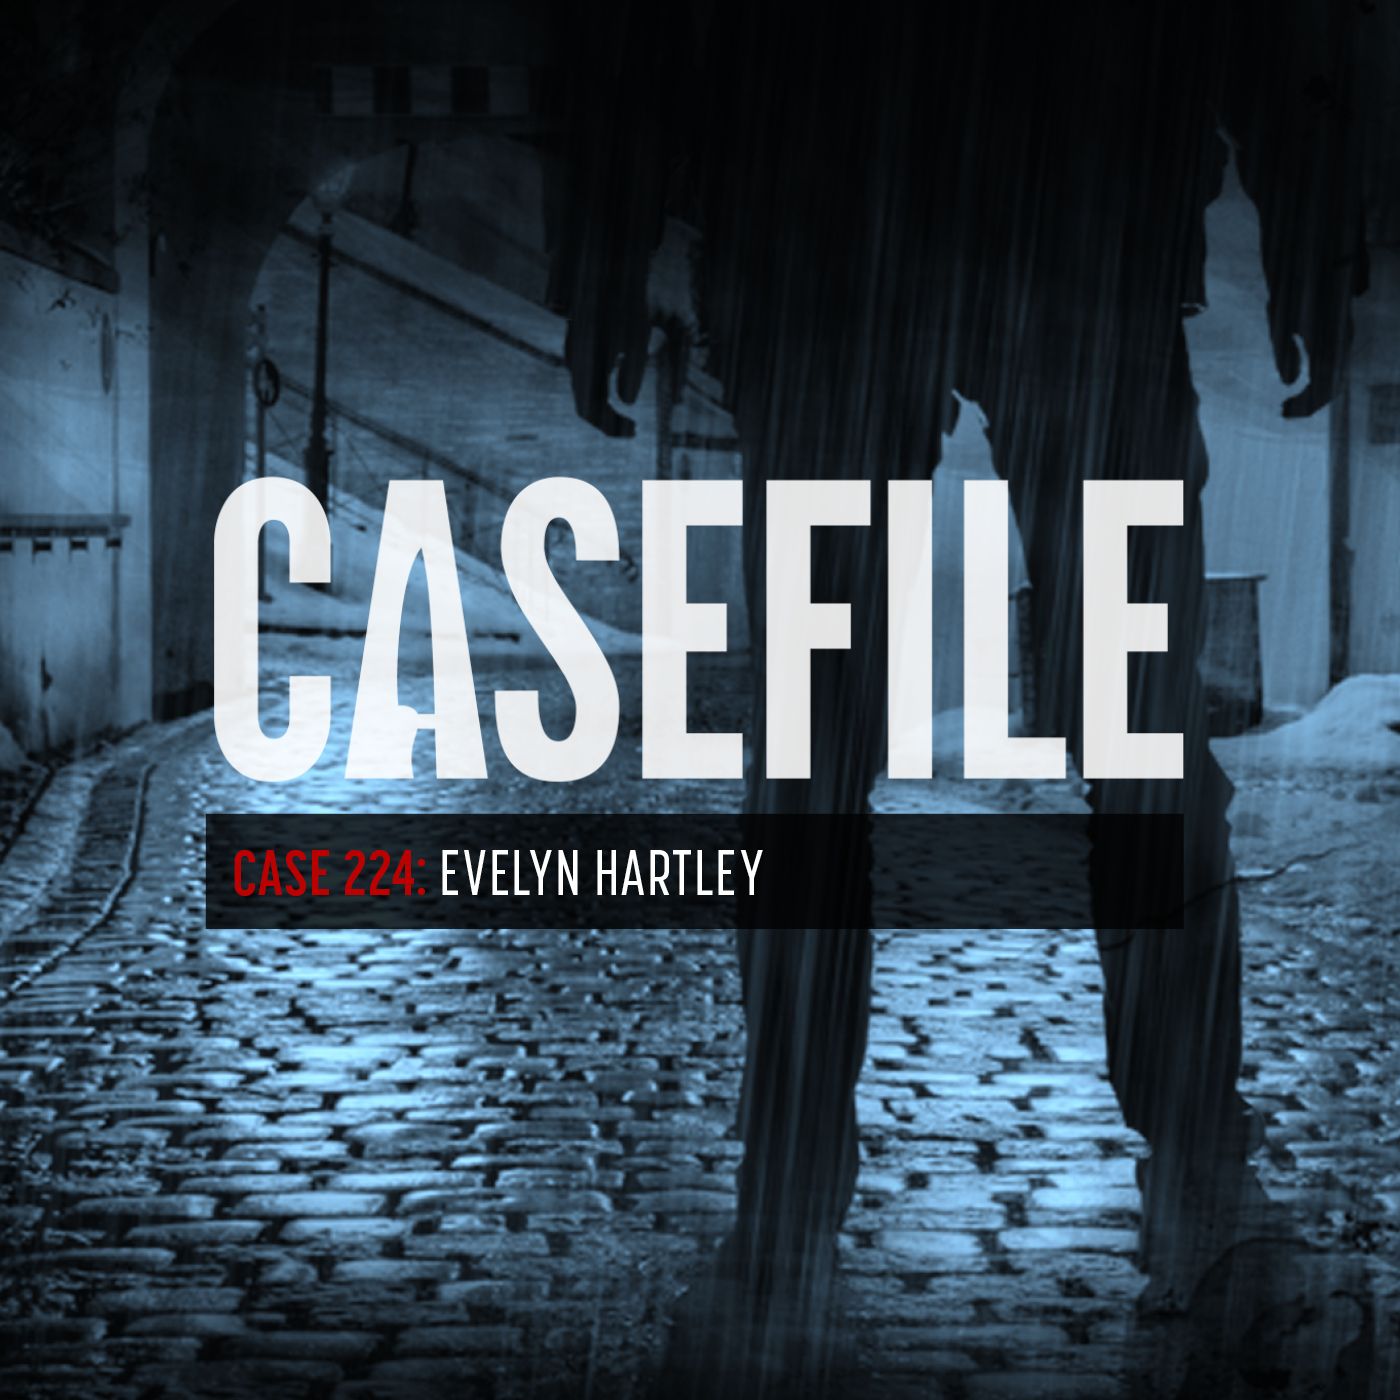 265: Case 224: Evelyn Hartley